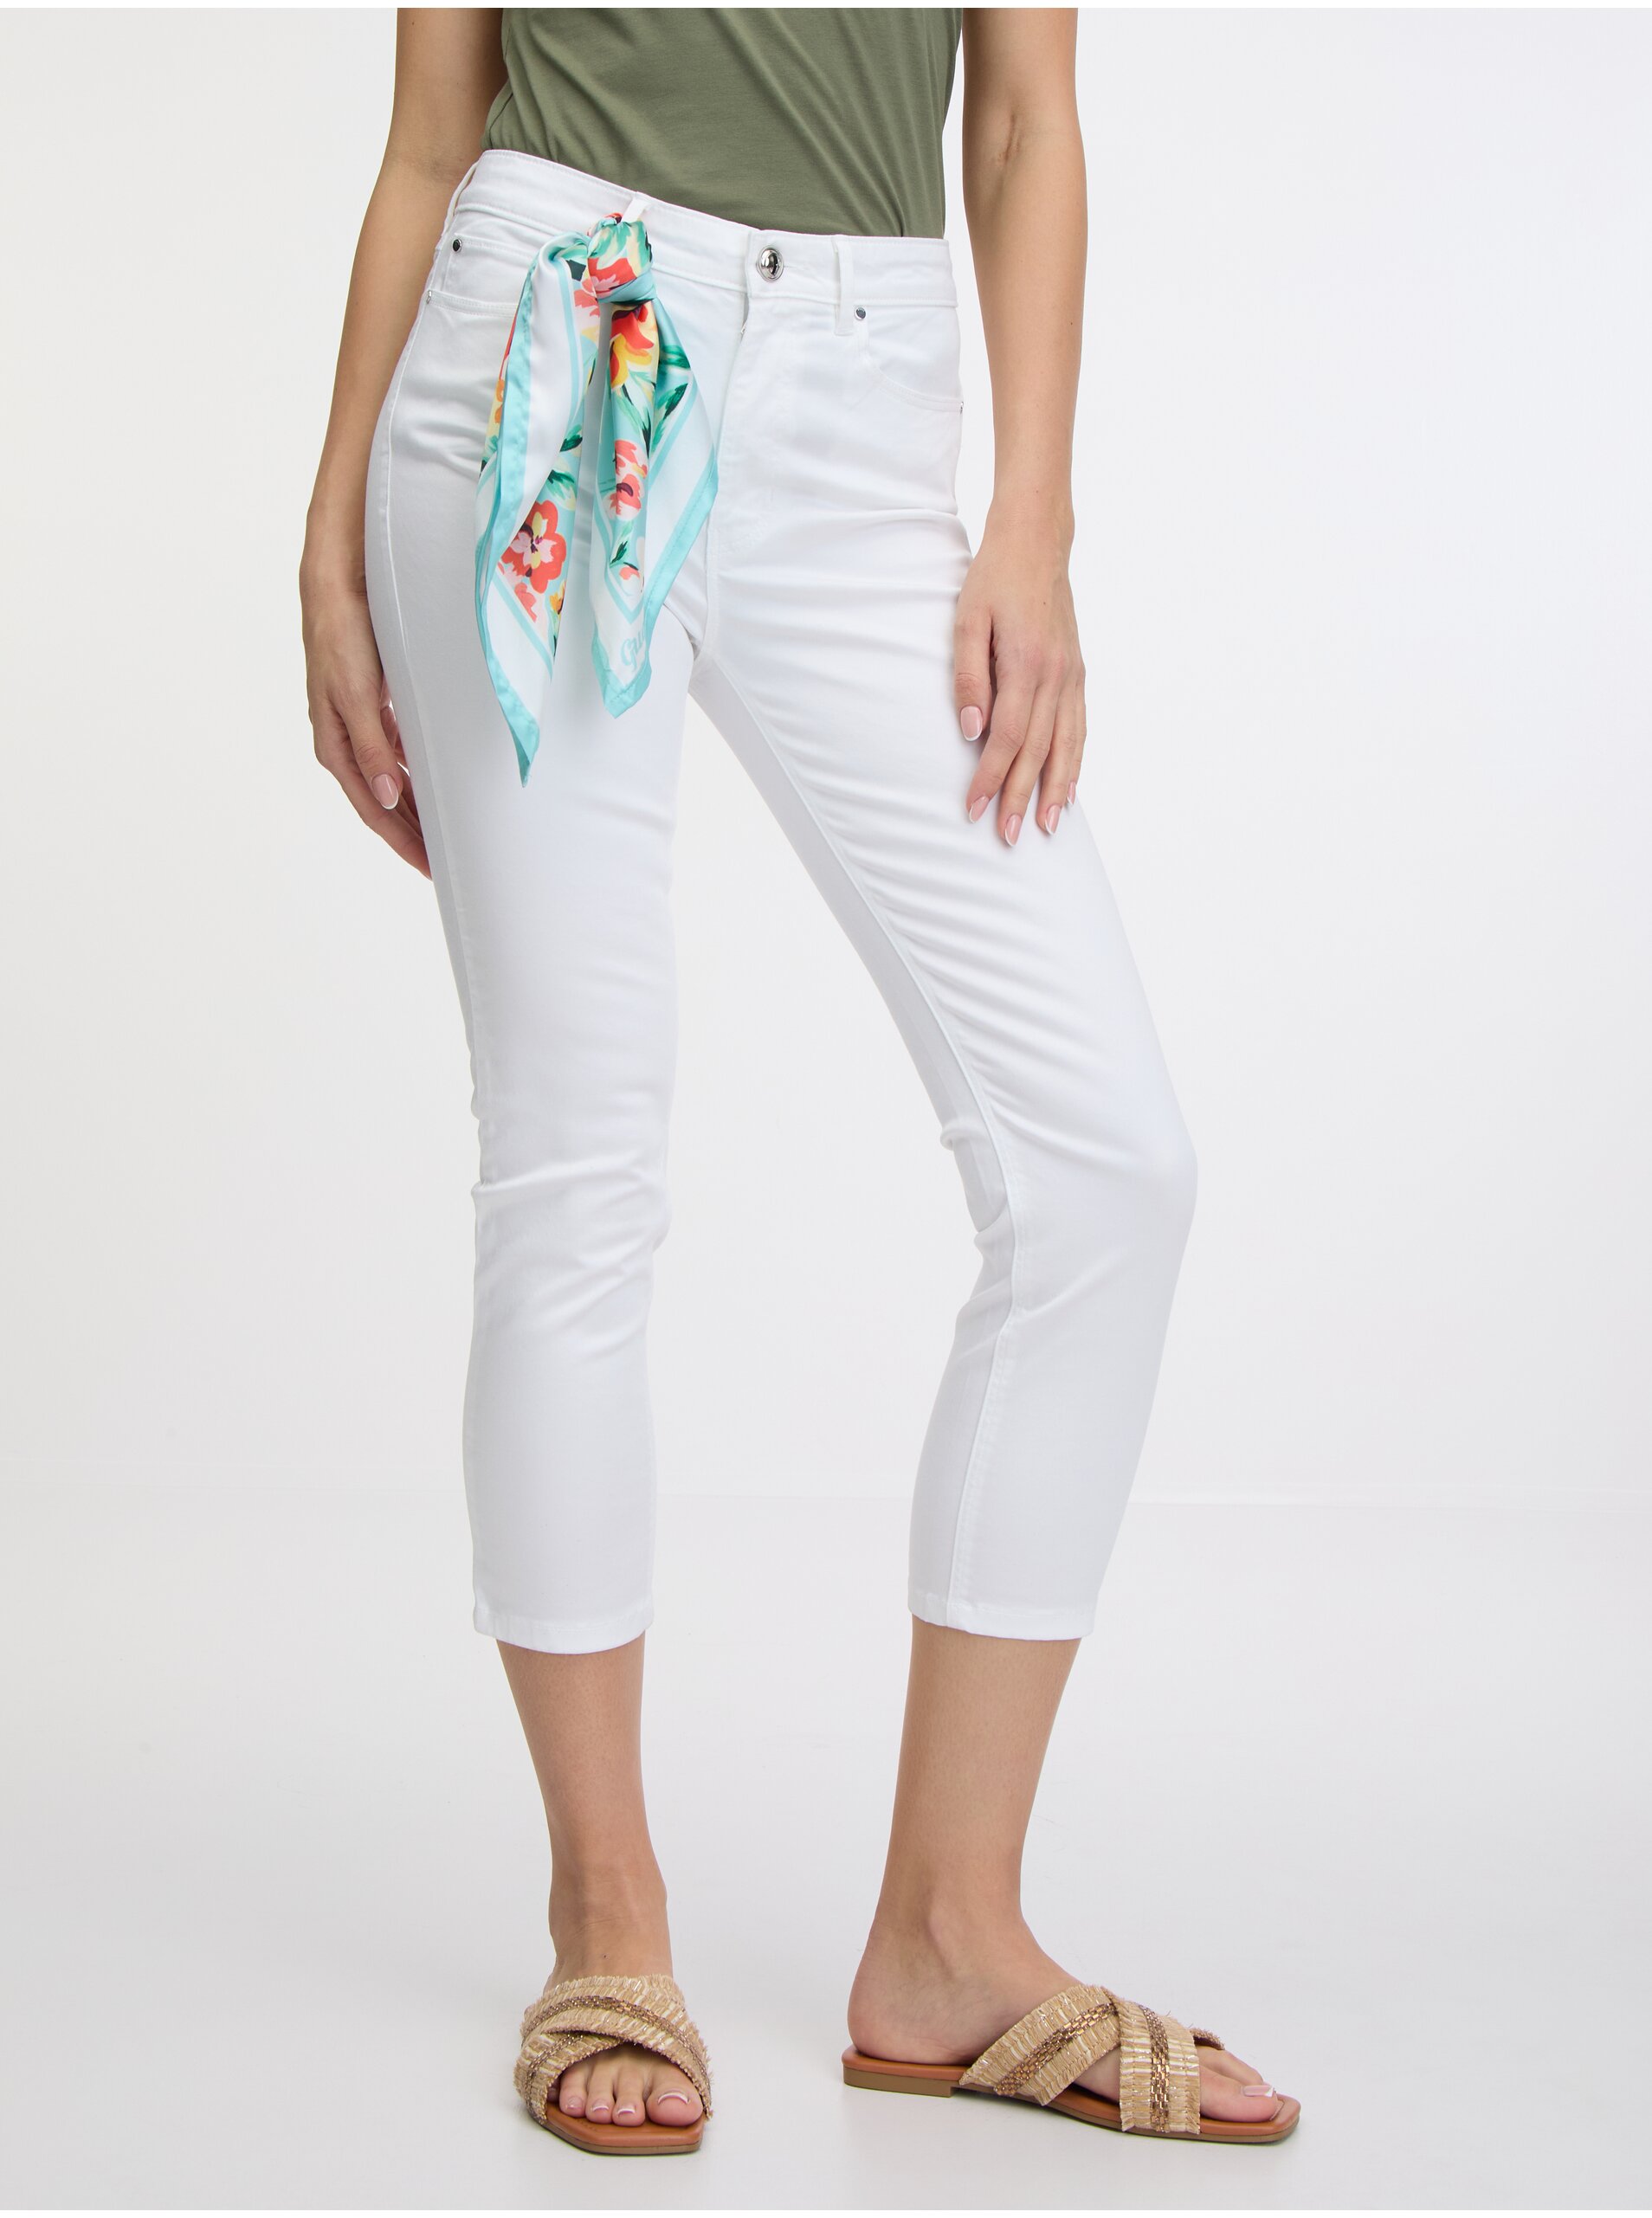 Lacno Biele dámske skinny fit džínsy so šatkou Guess 1981 Capri